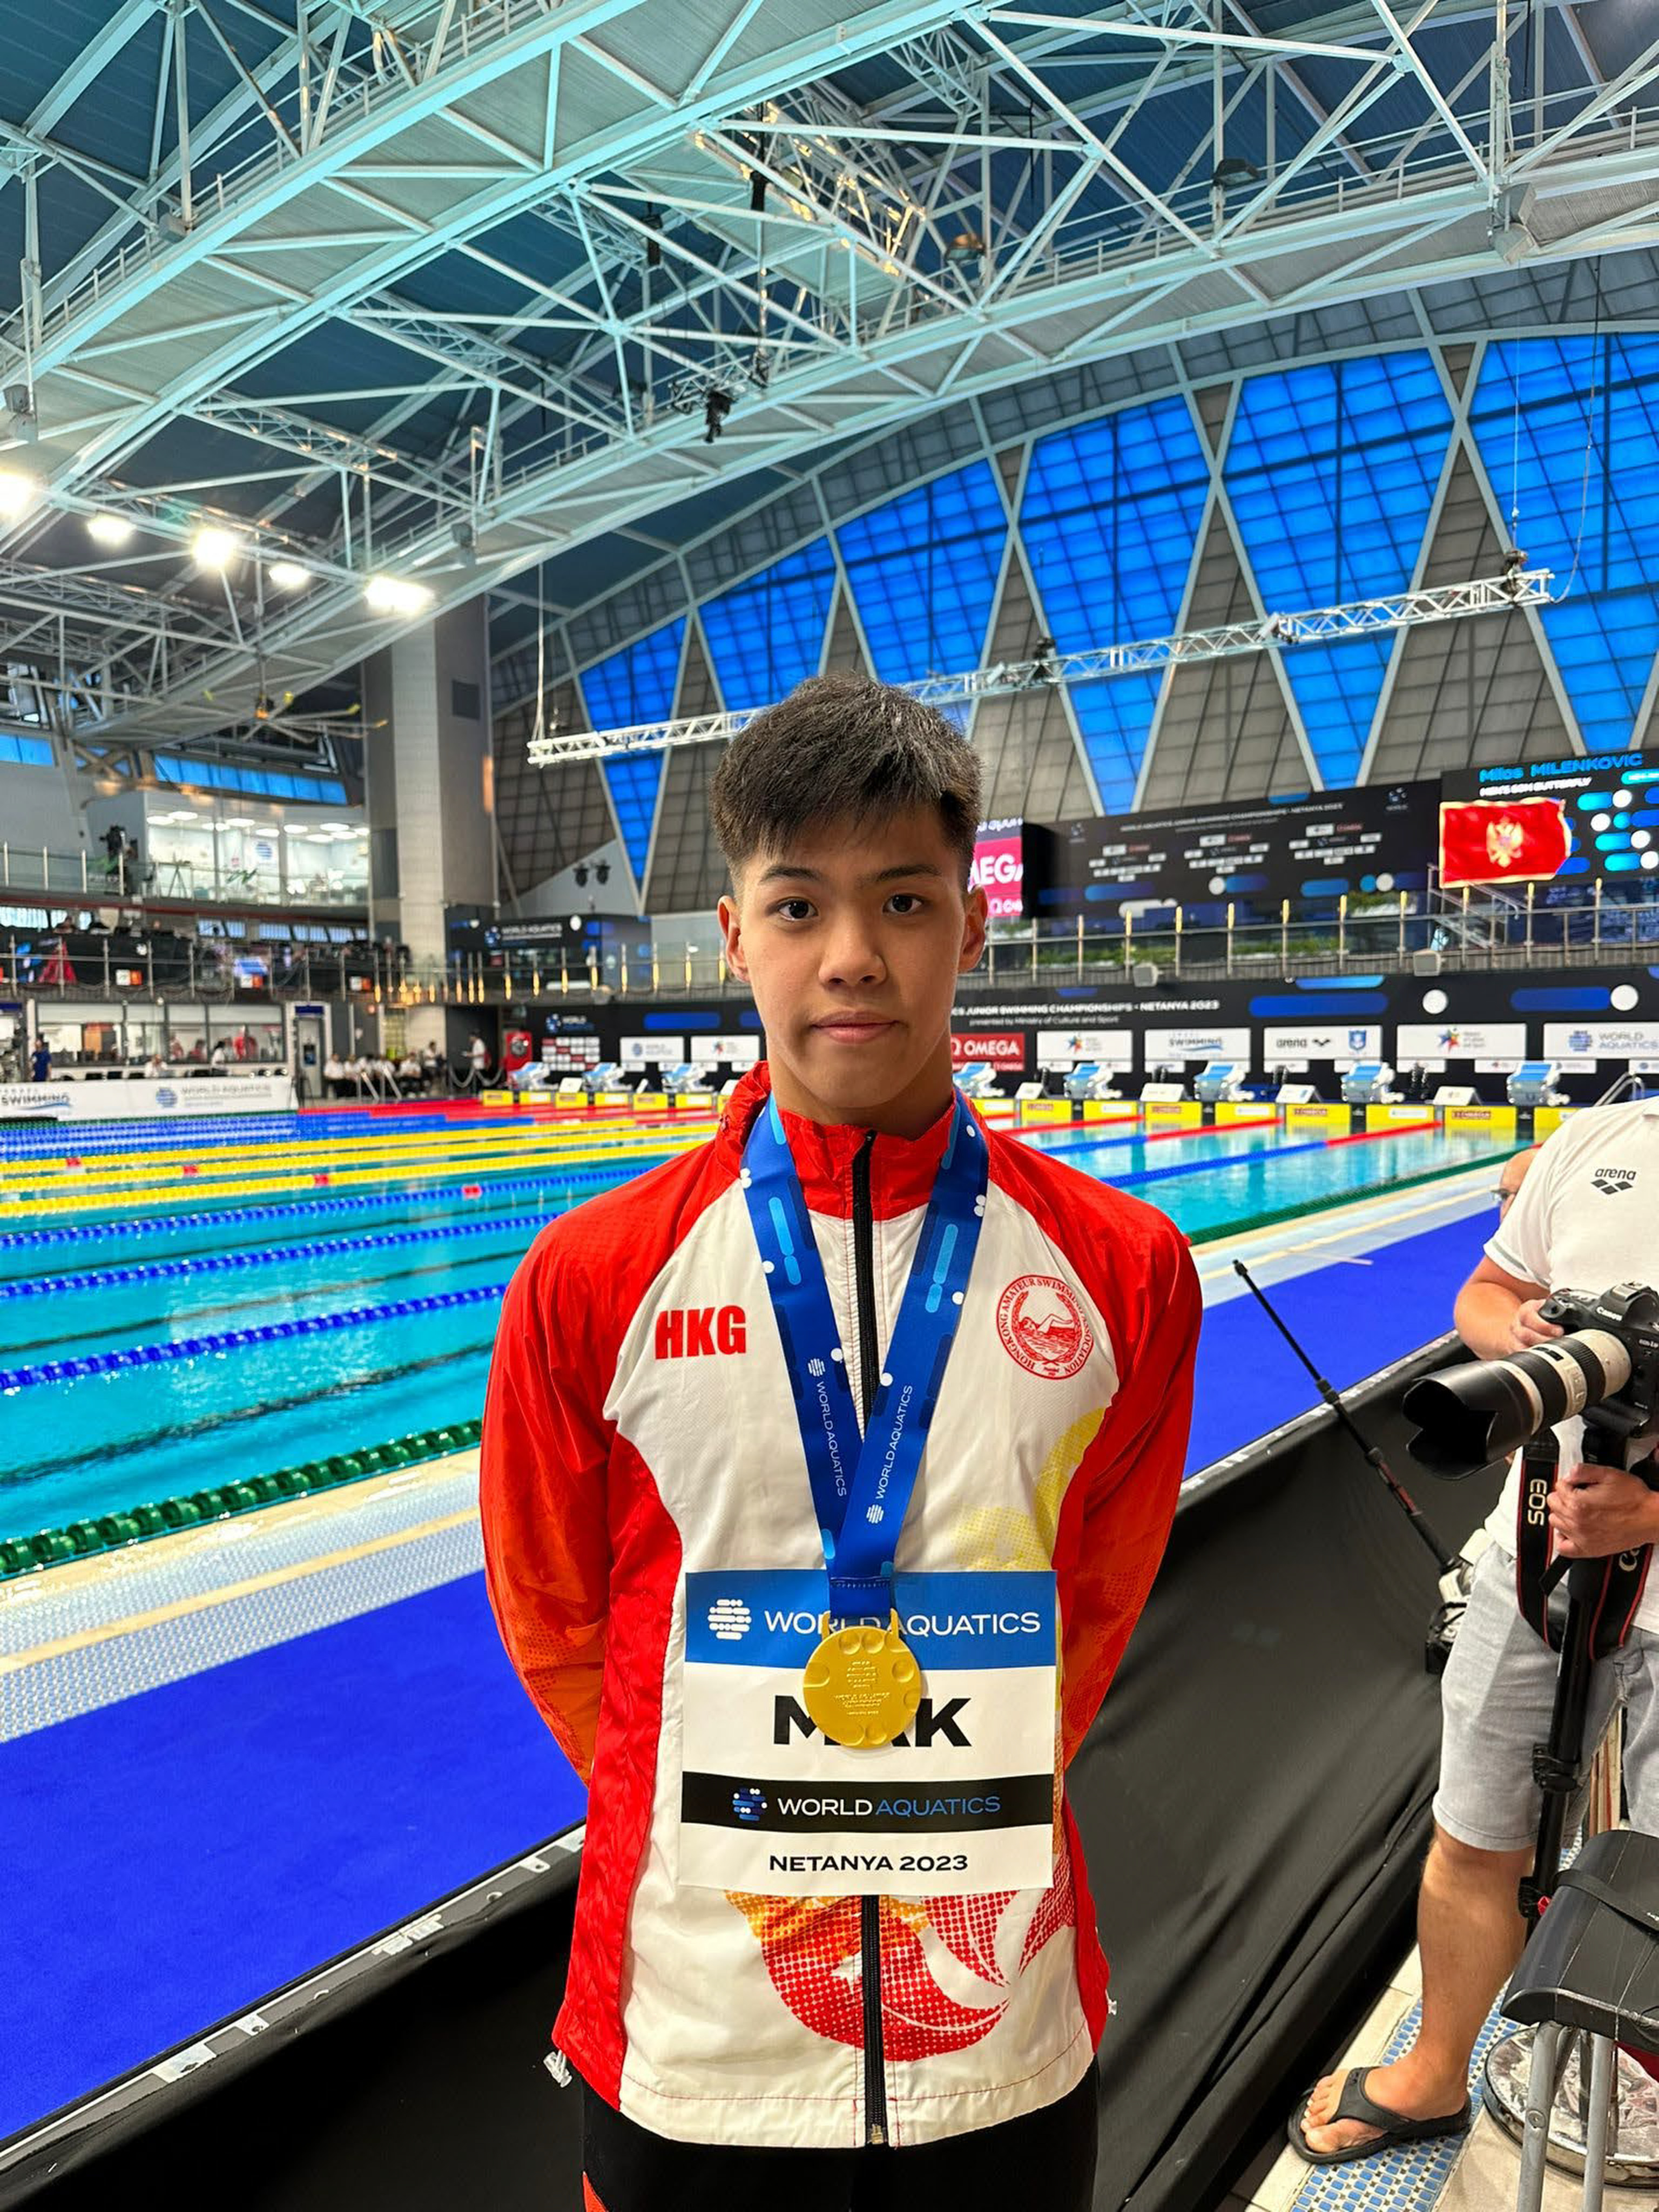 Adam Mak with his gold medal at the World Aquatics Junior Swimming Championships. Photo: Handout